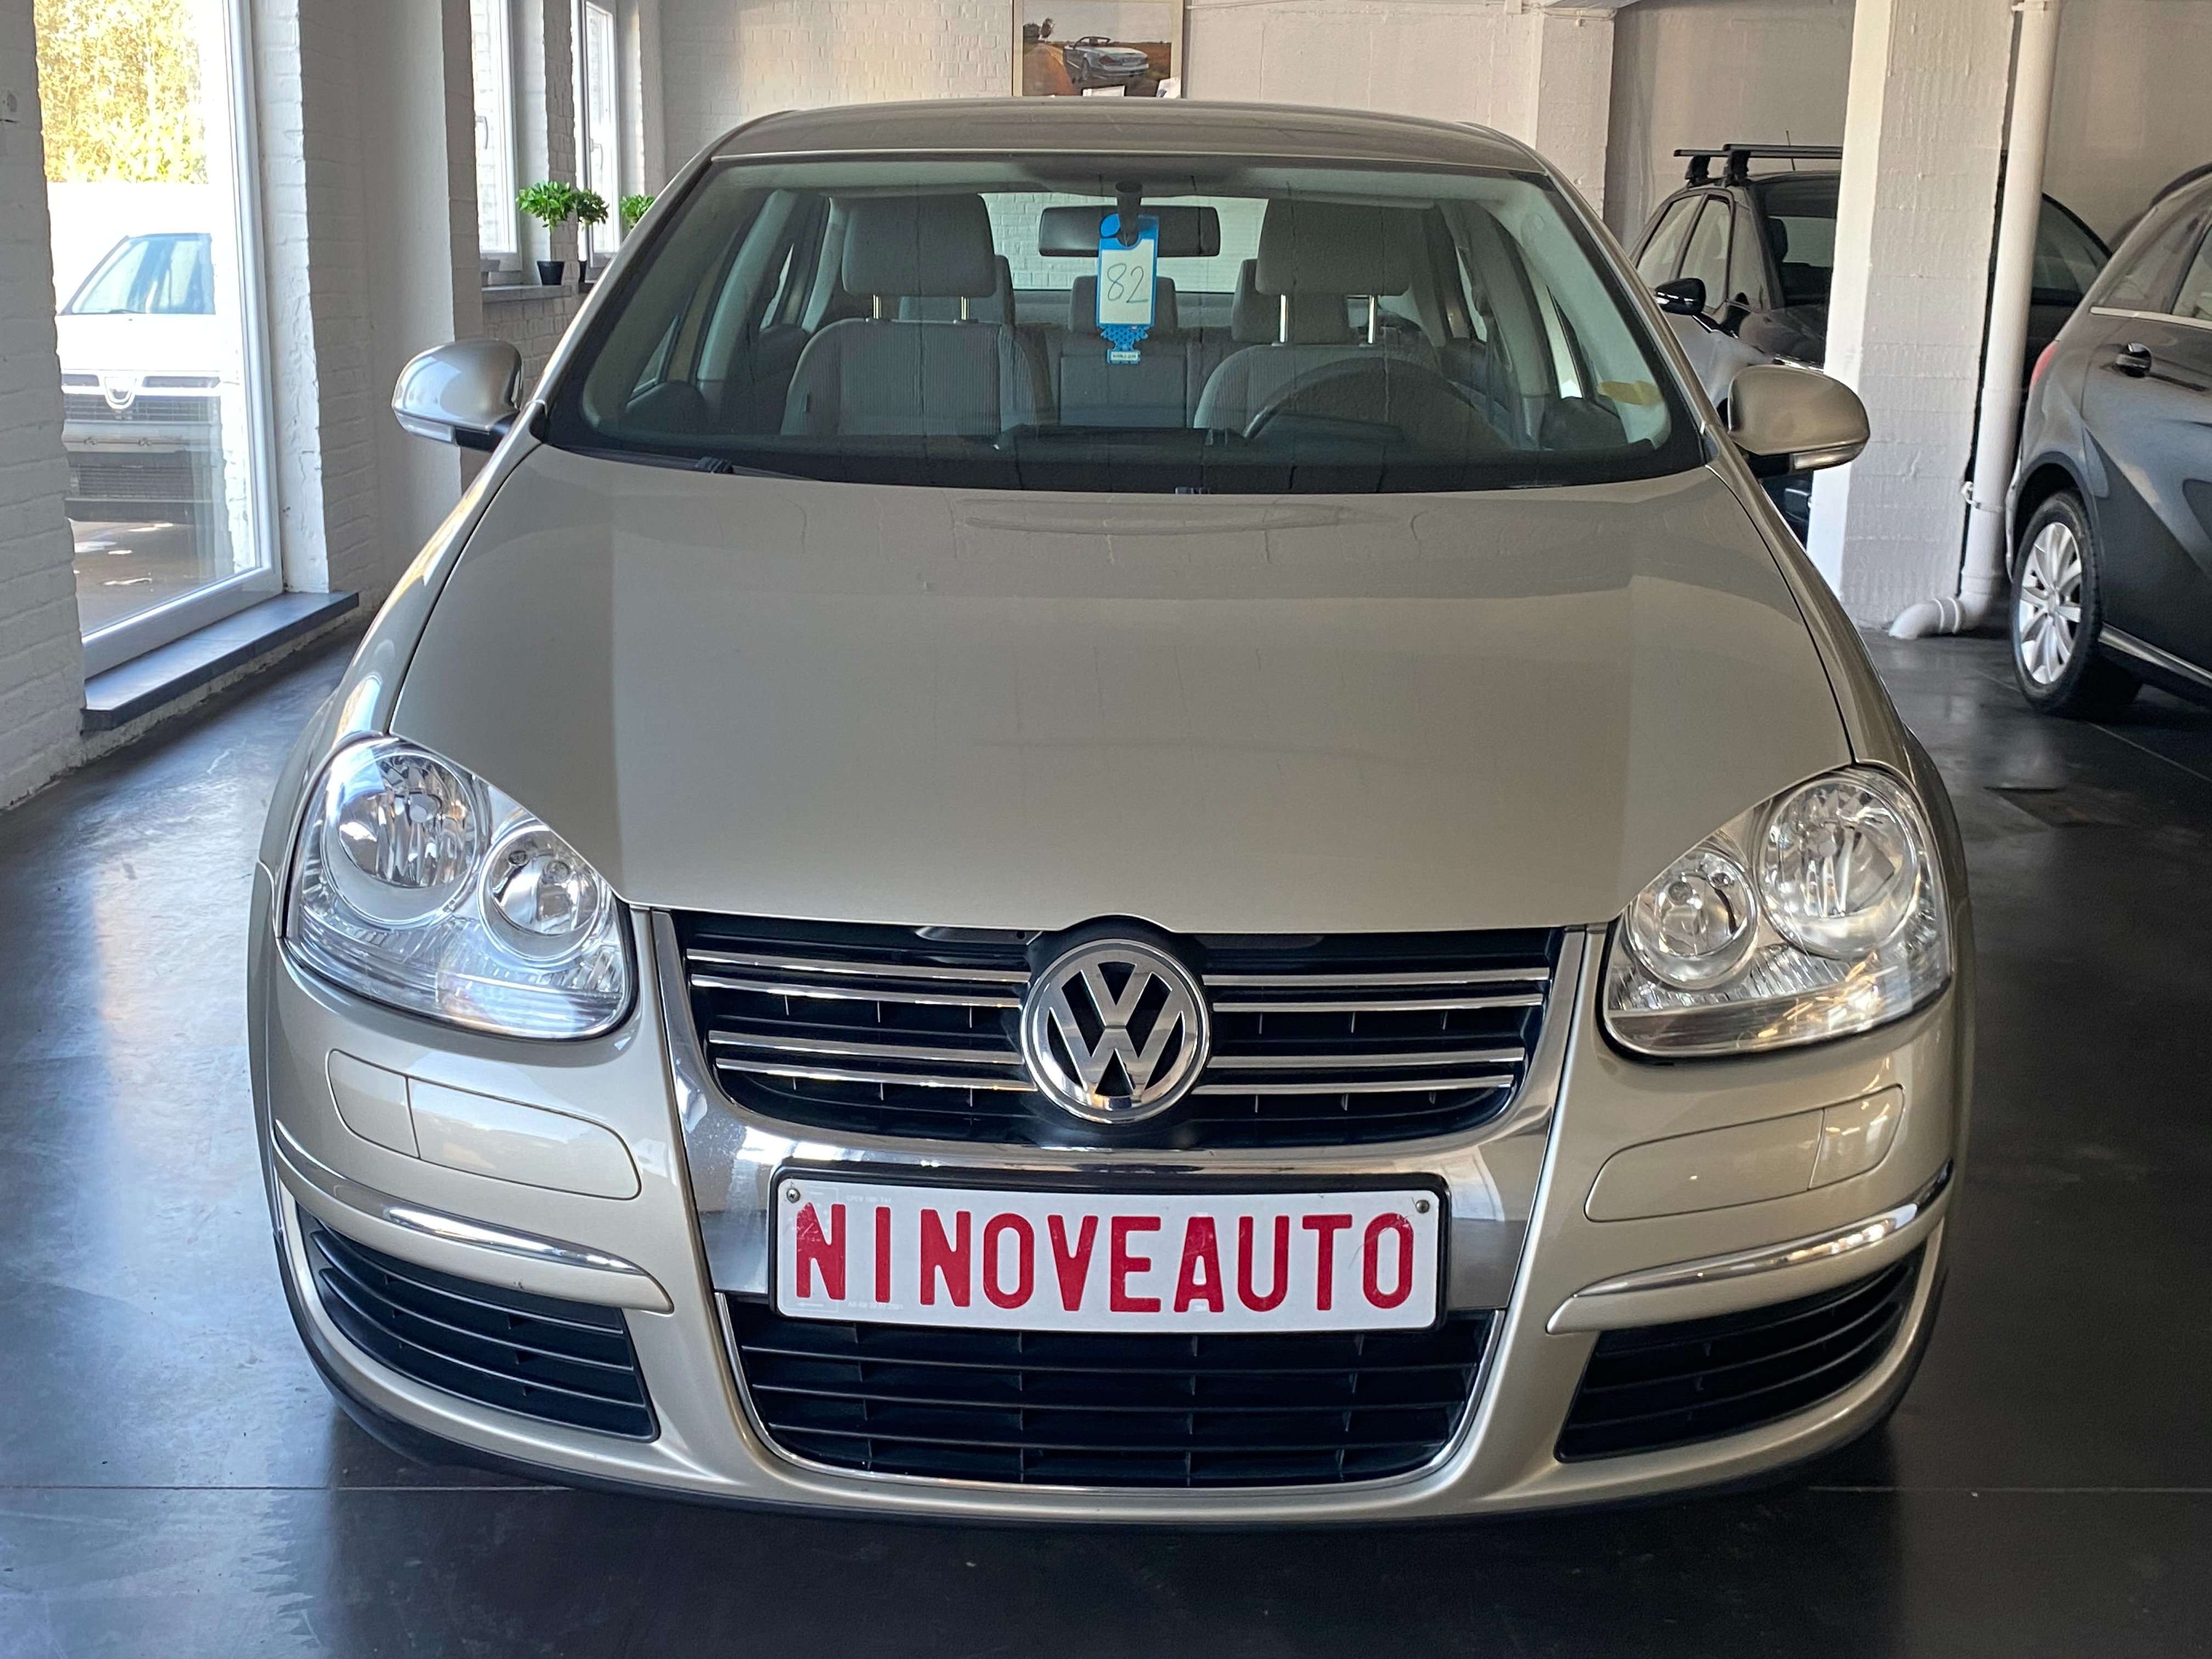 Ninove auto - Volkswagen Jetta